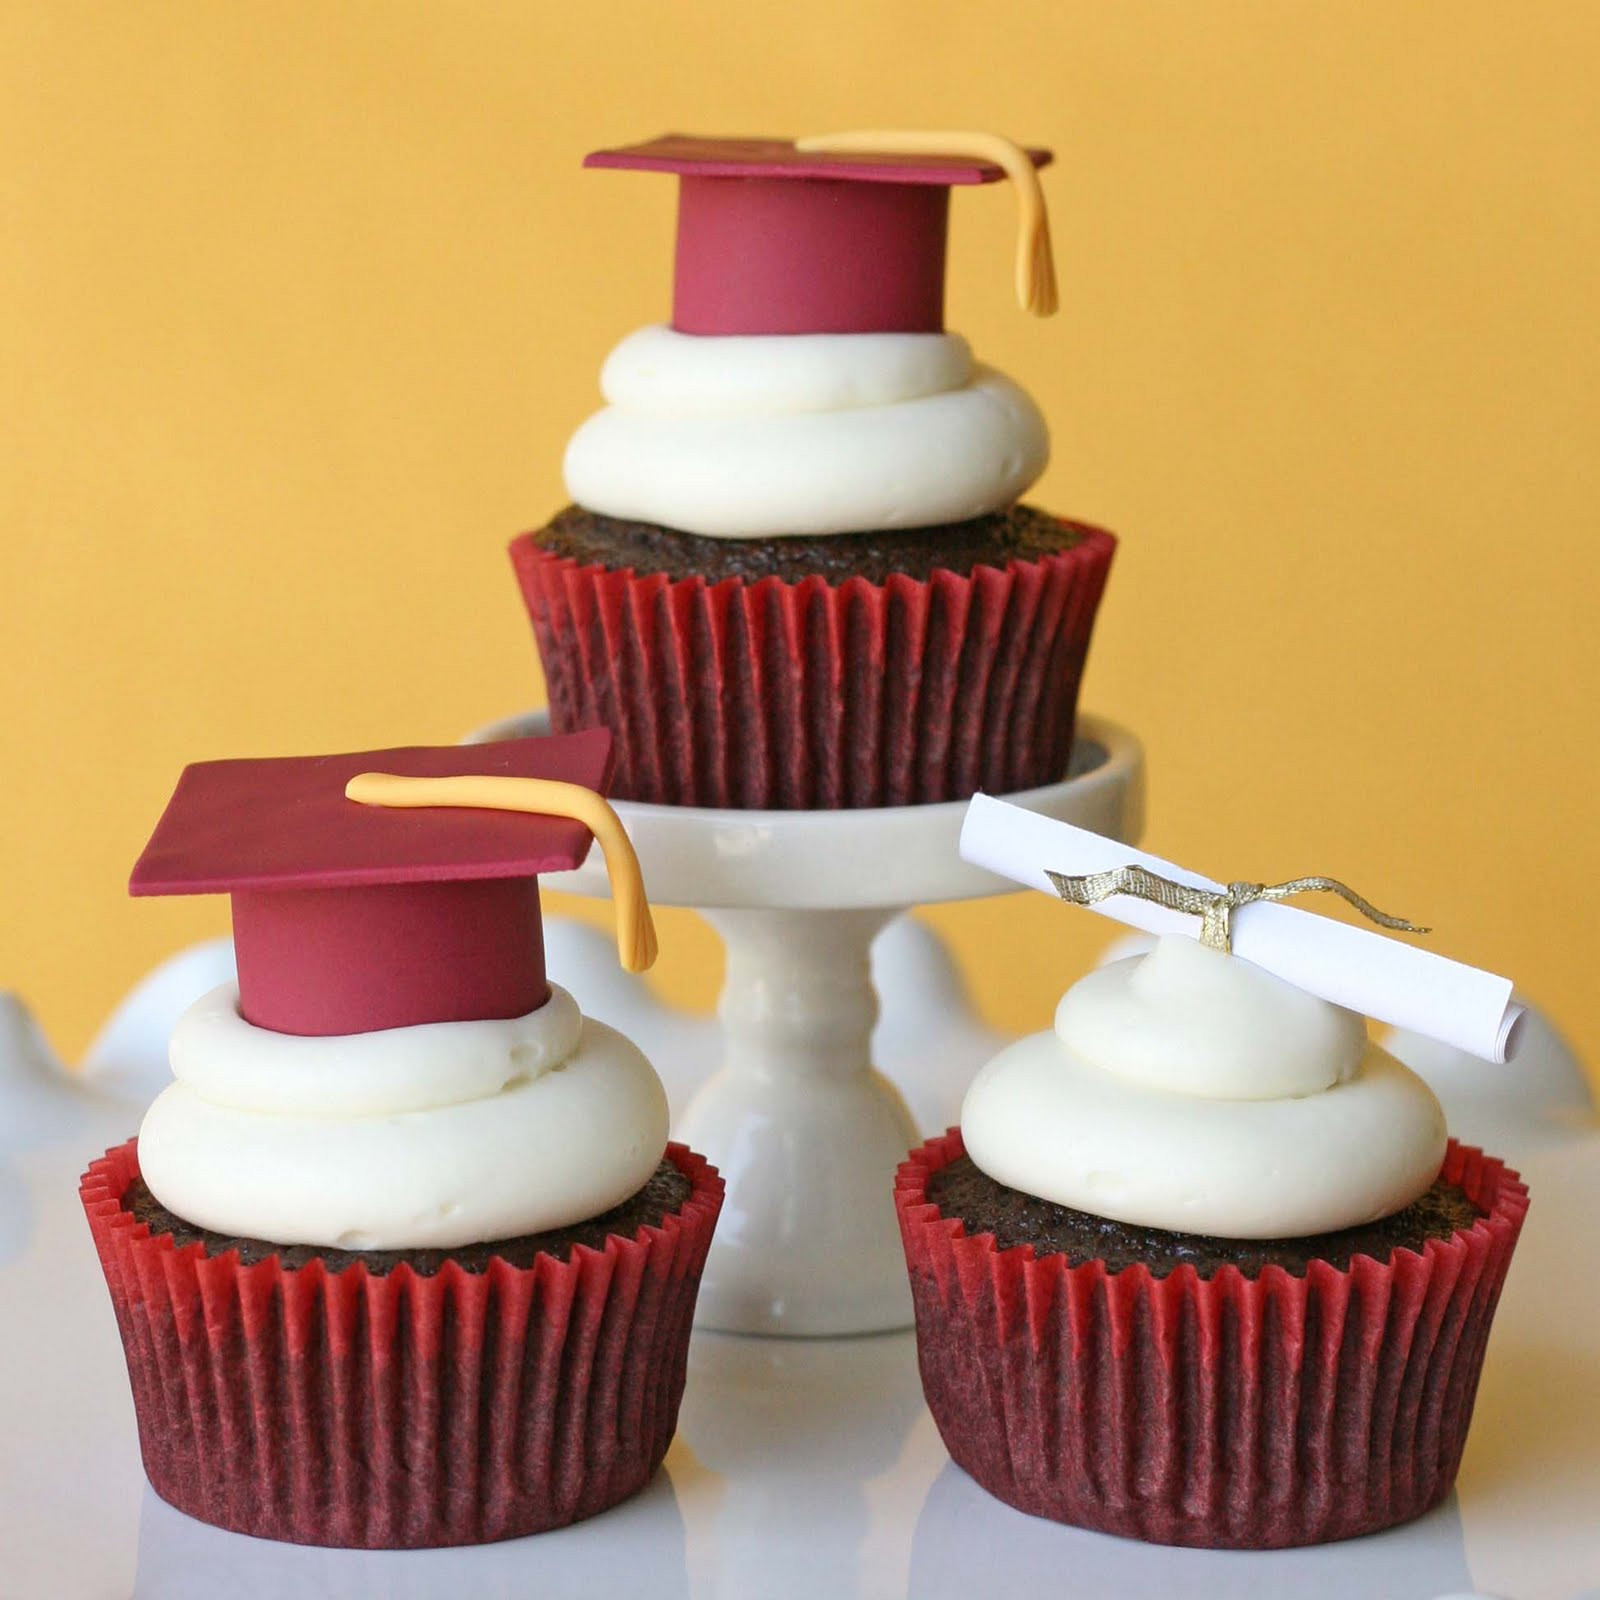 Graduation Cupcakes Decorating Ideas
 Graduation Cupcakes and How To Make Fondant Graduation